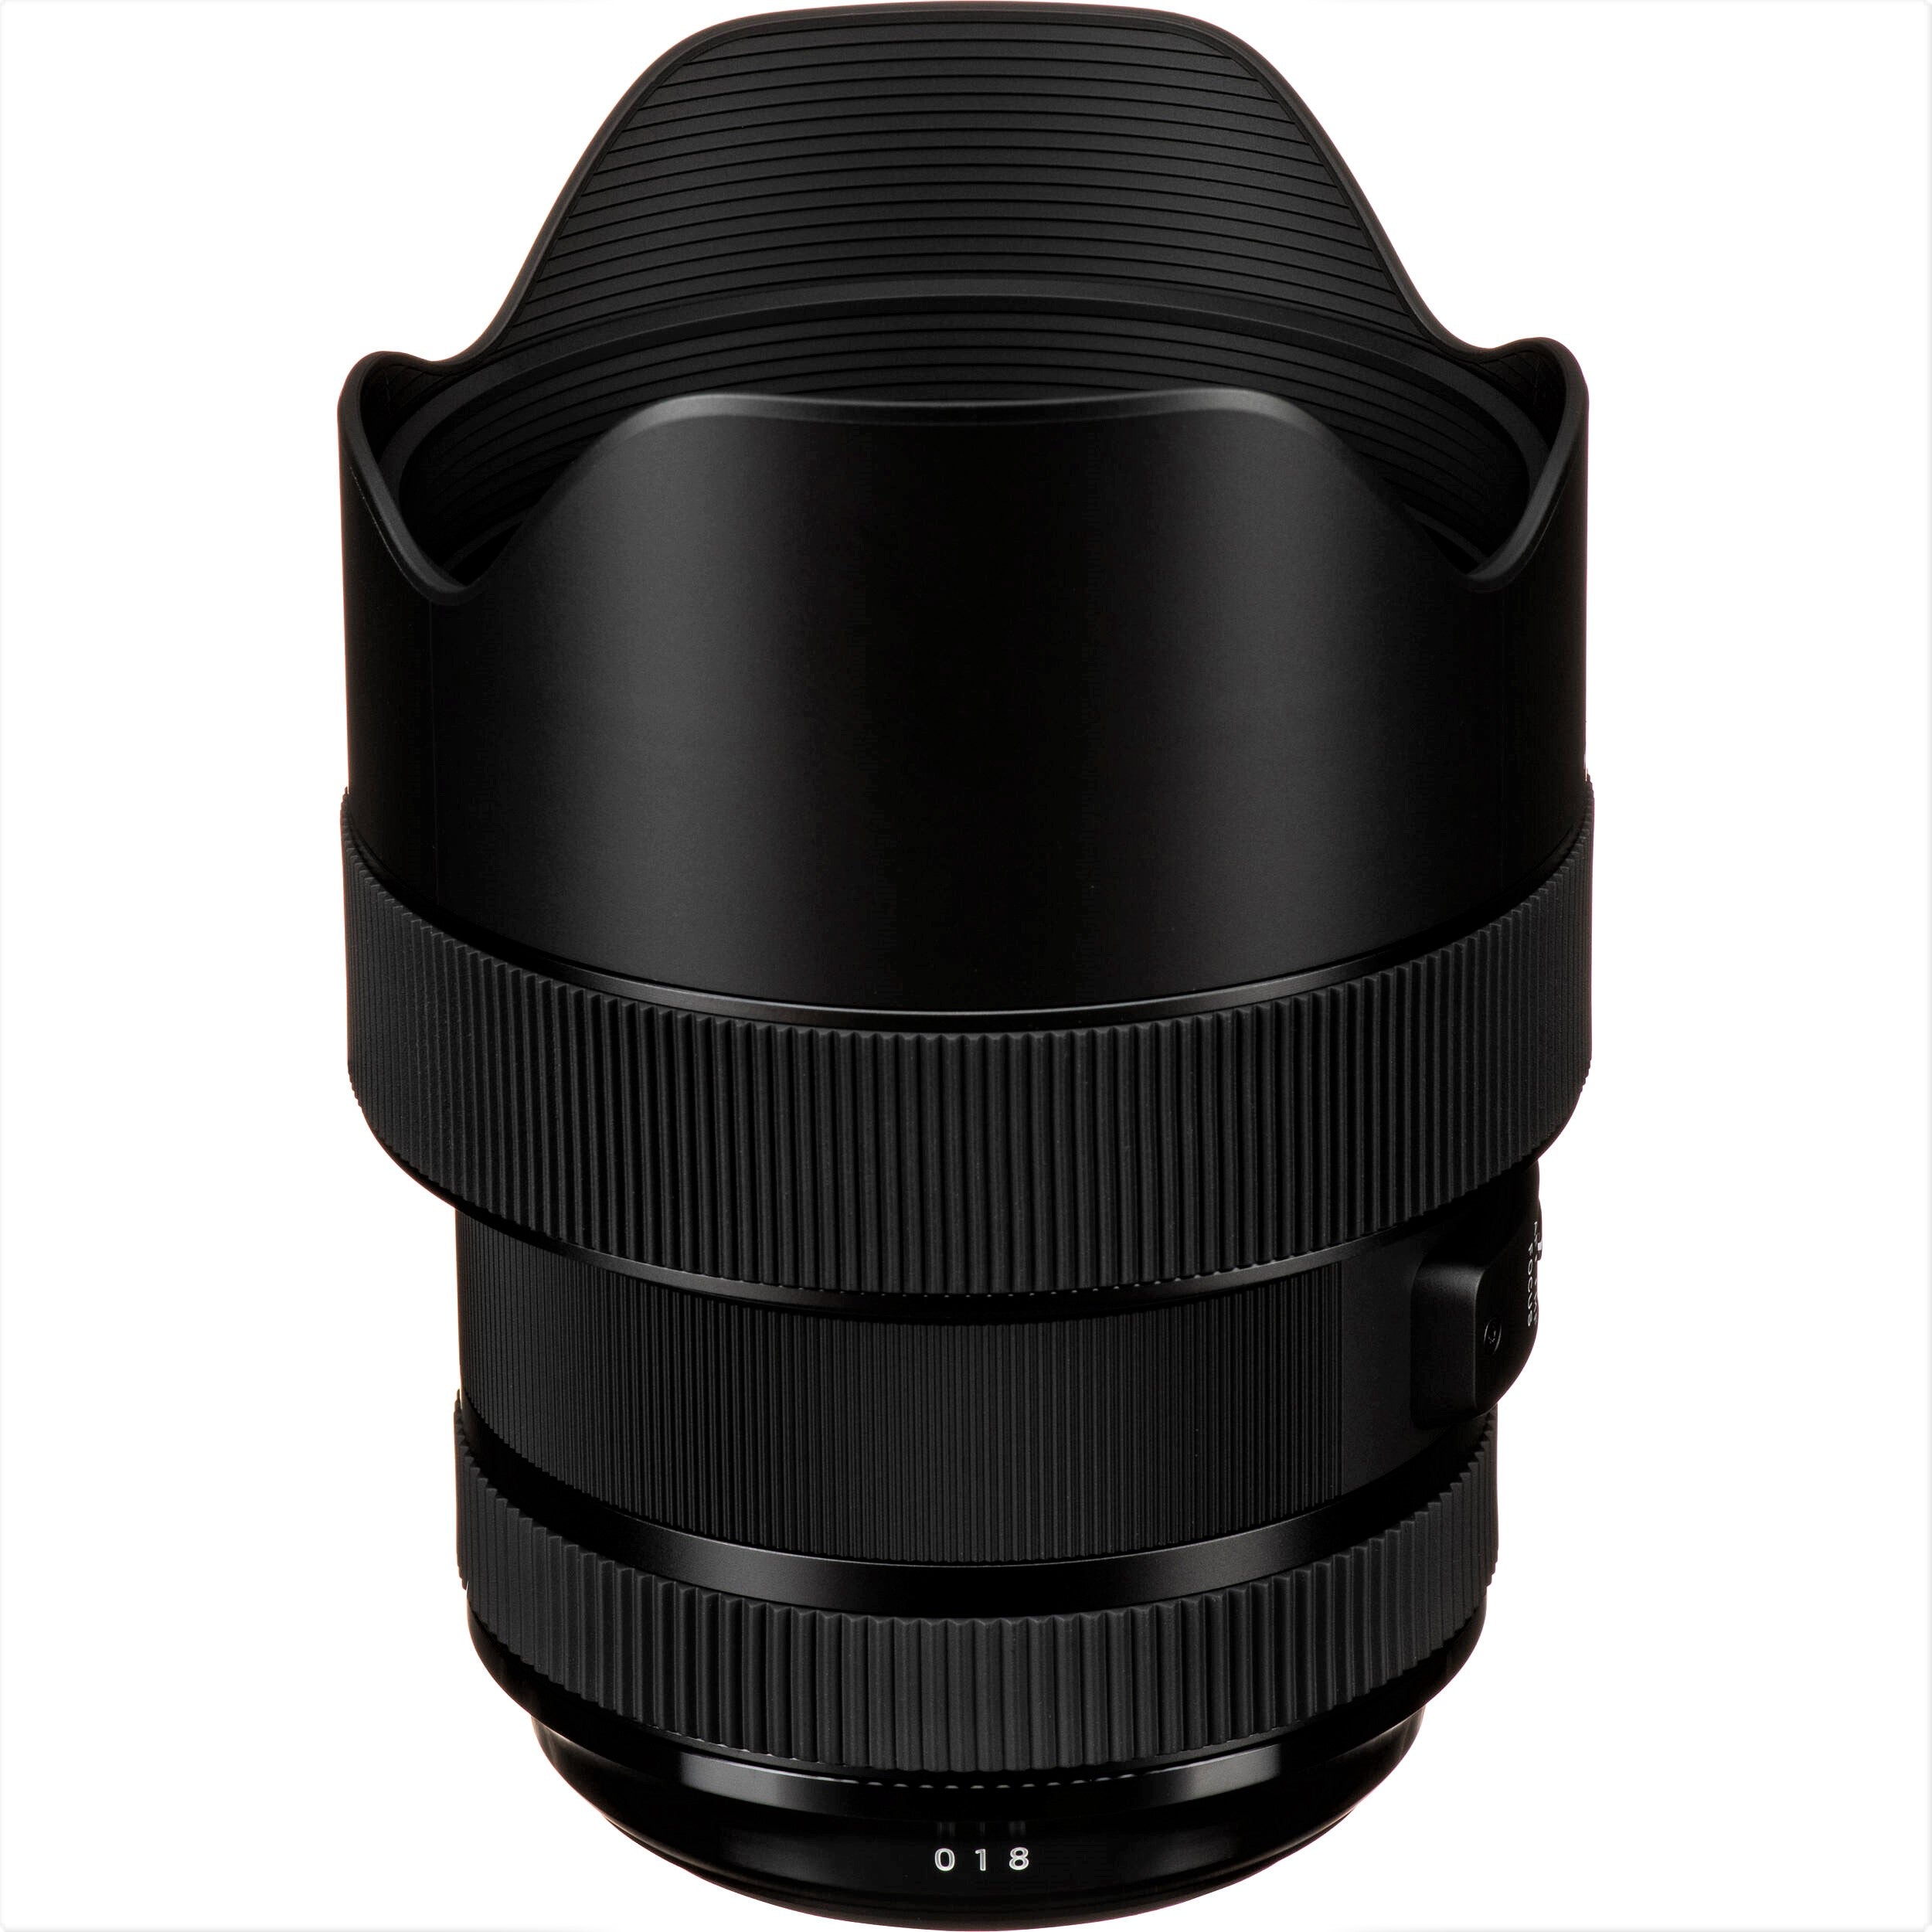 Sigma 14-24mm F2.8 DG HSM Art Lens for Nikon F